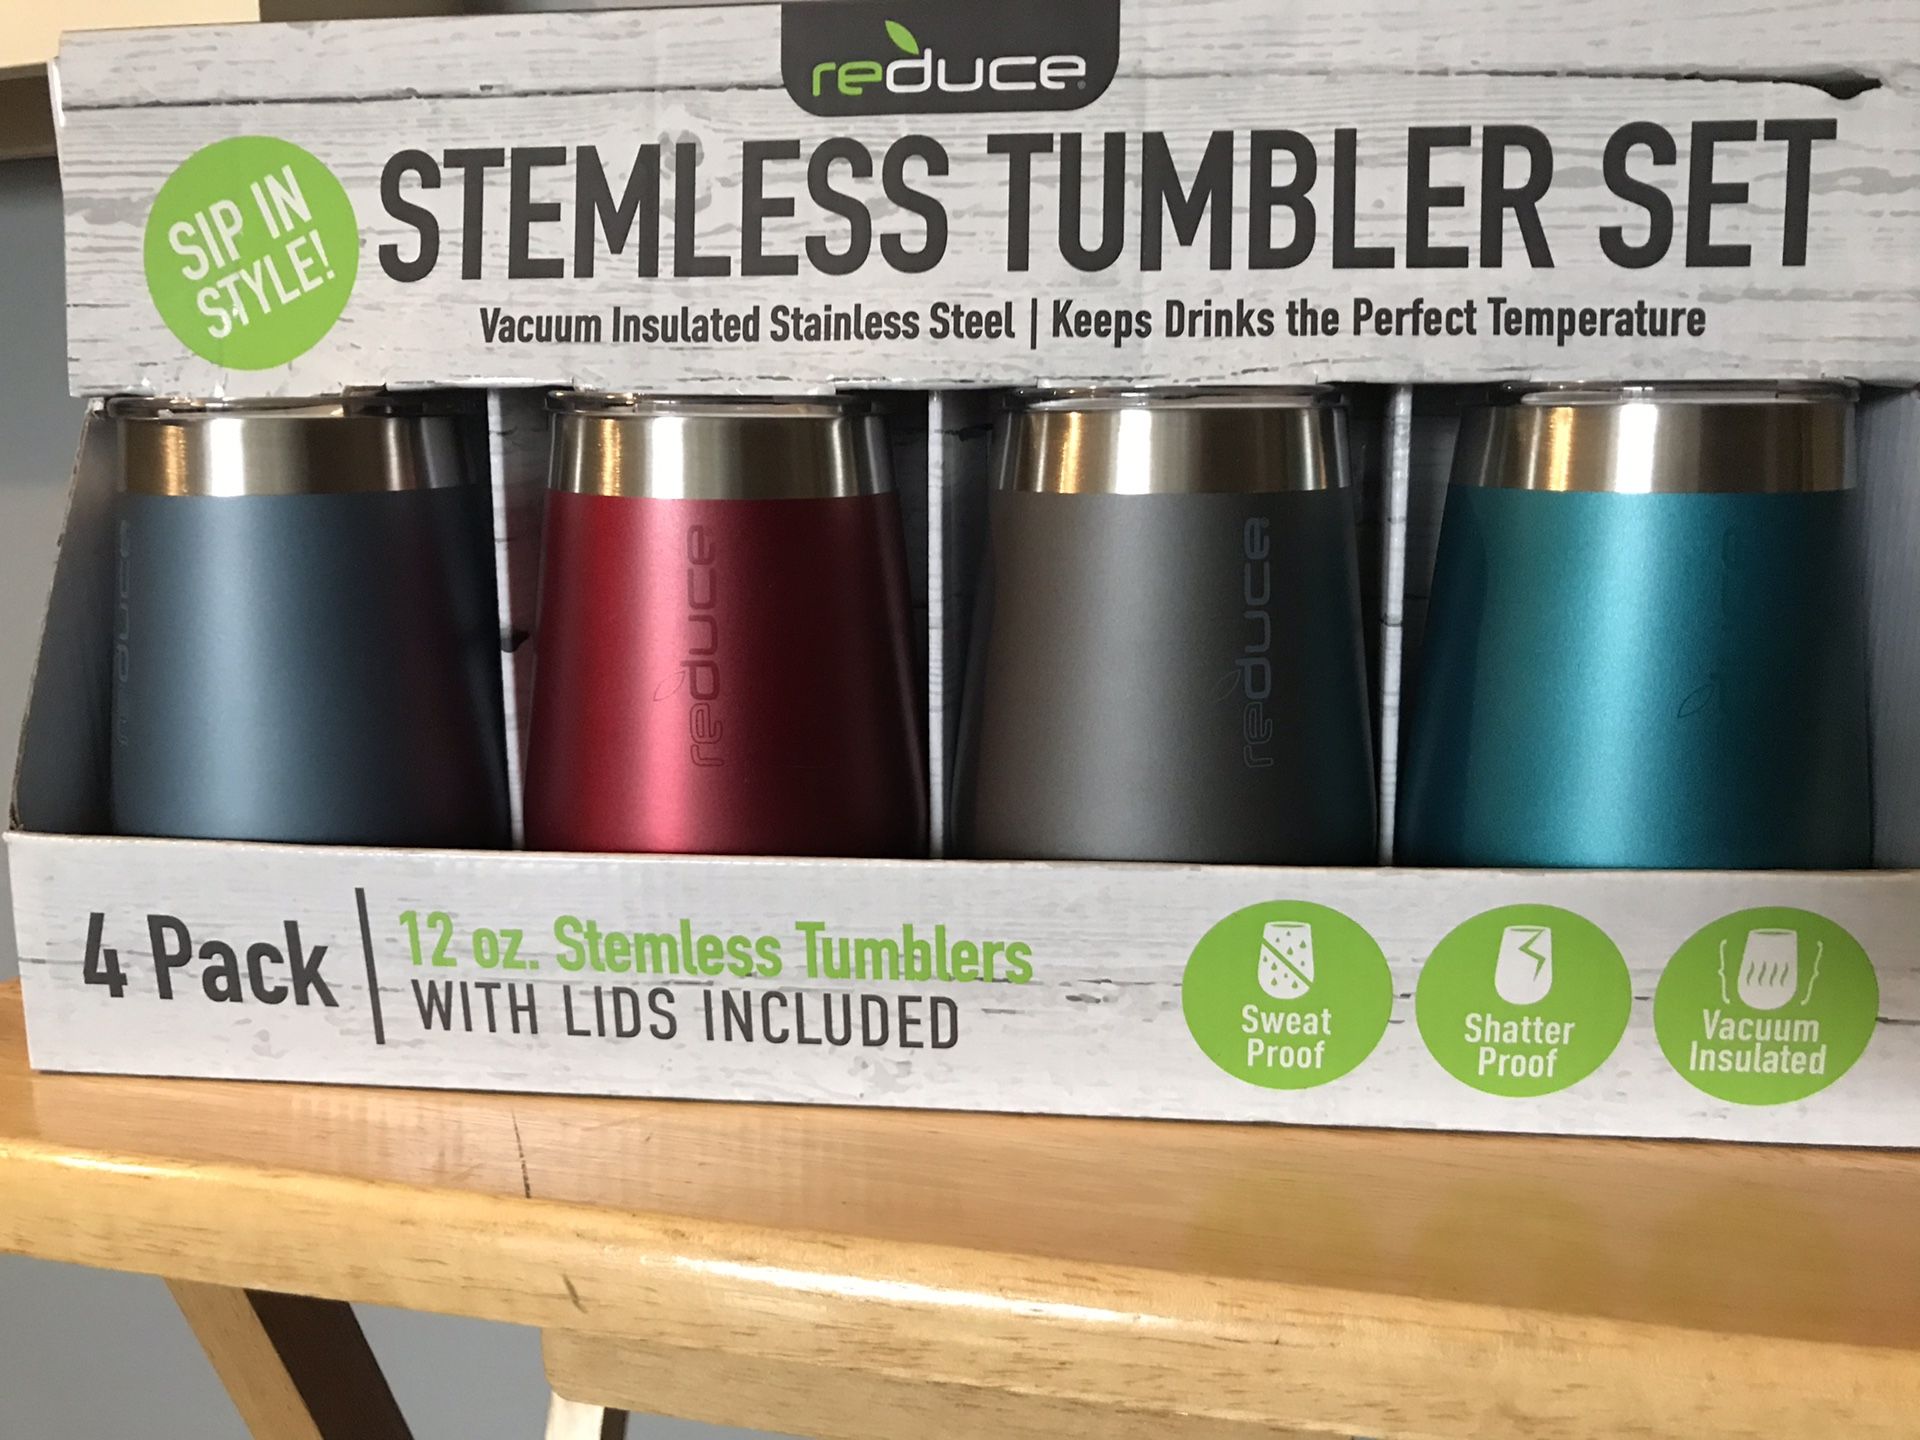 Reduce Stemless Tumbler Set of 4